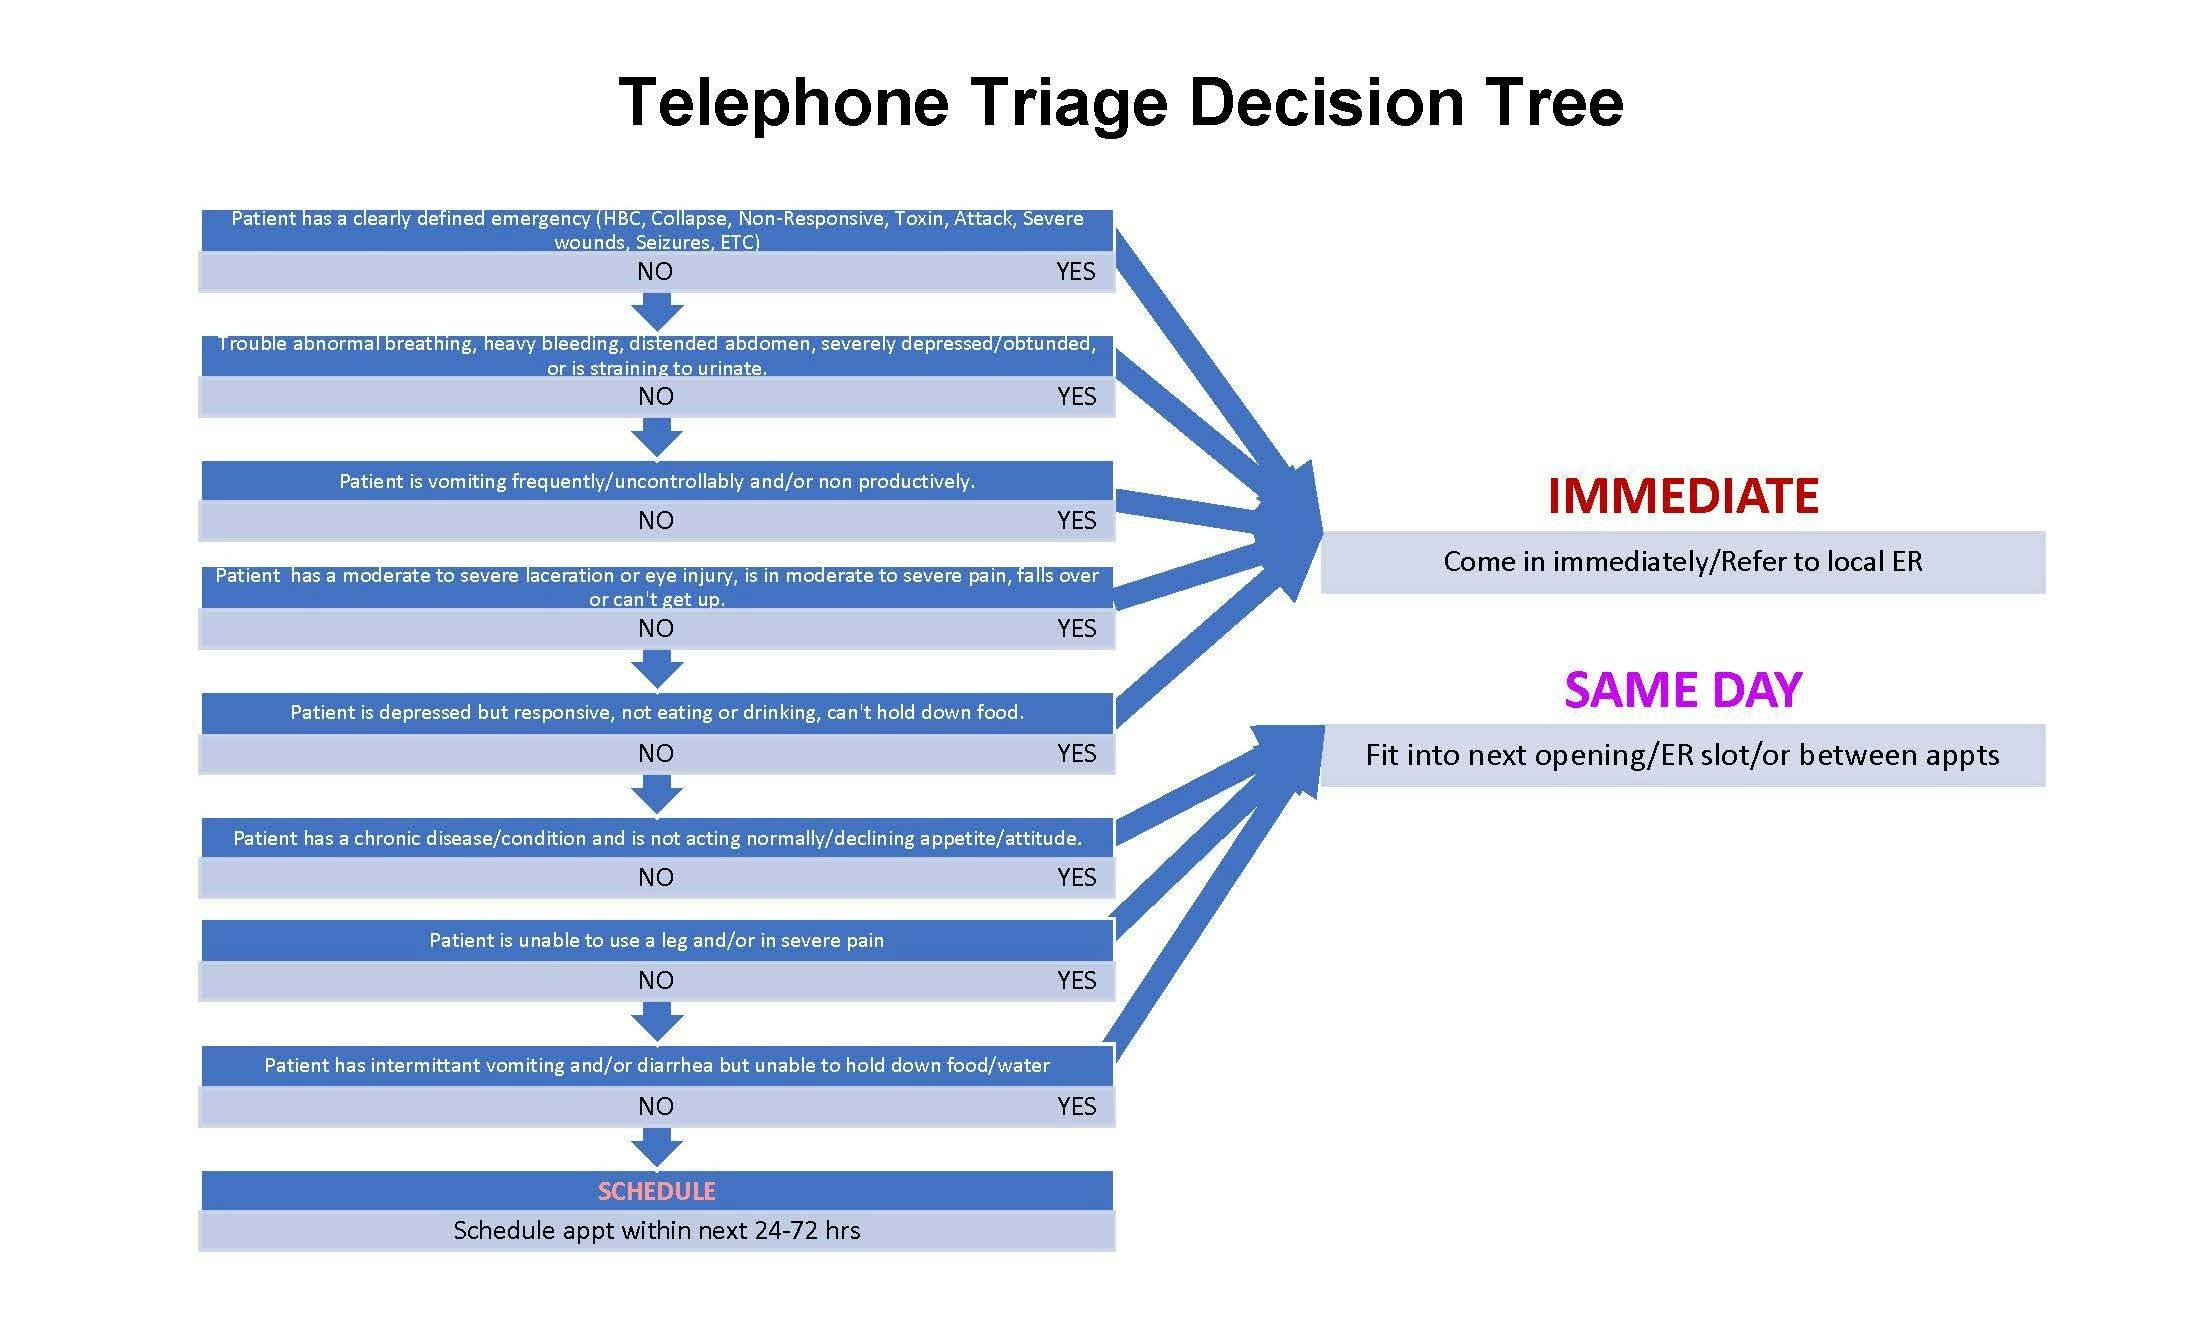 Figure 2: Telephone Triage Decision Tree